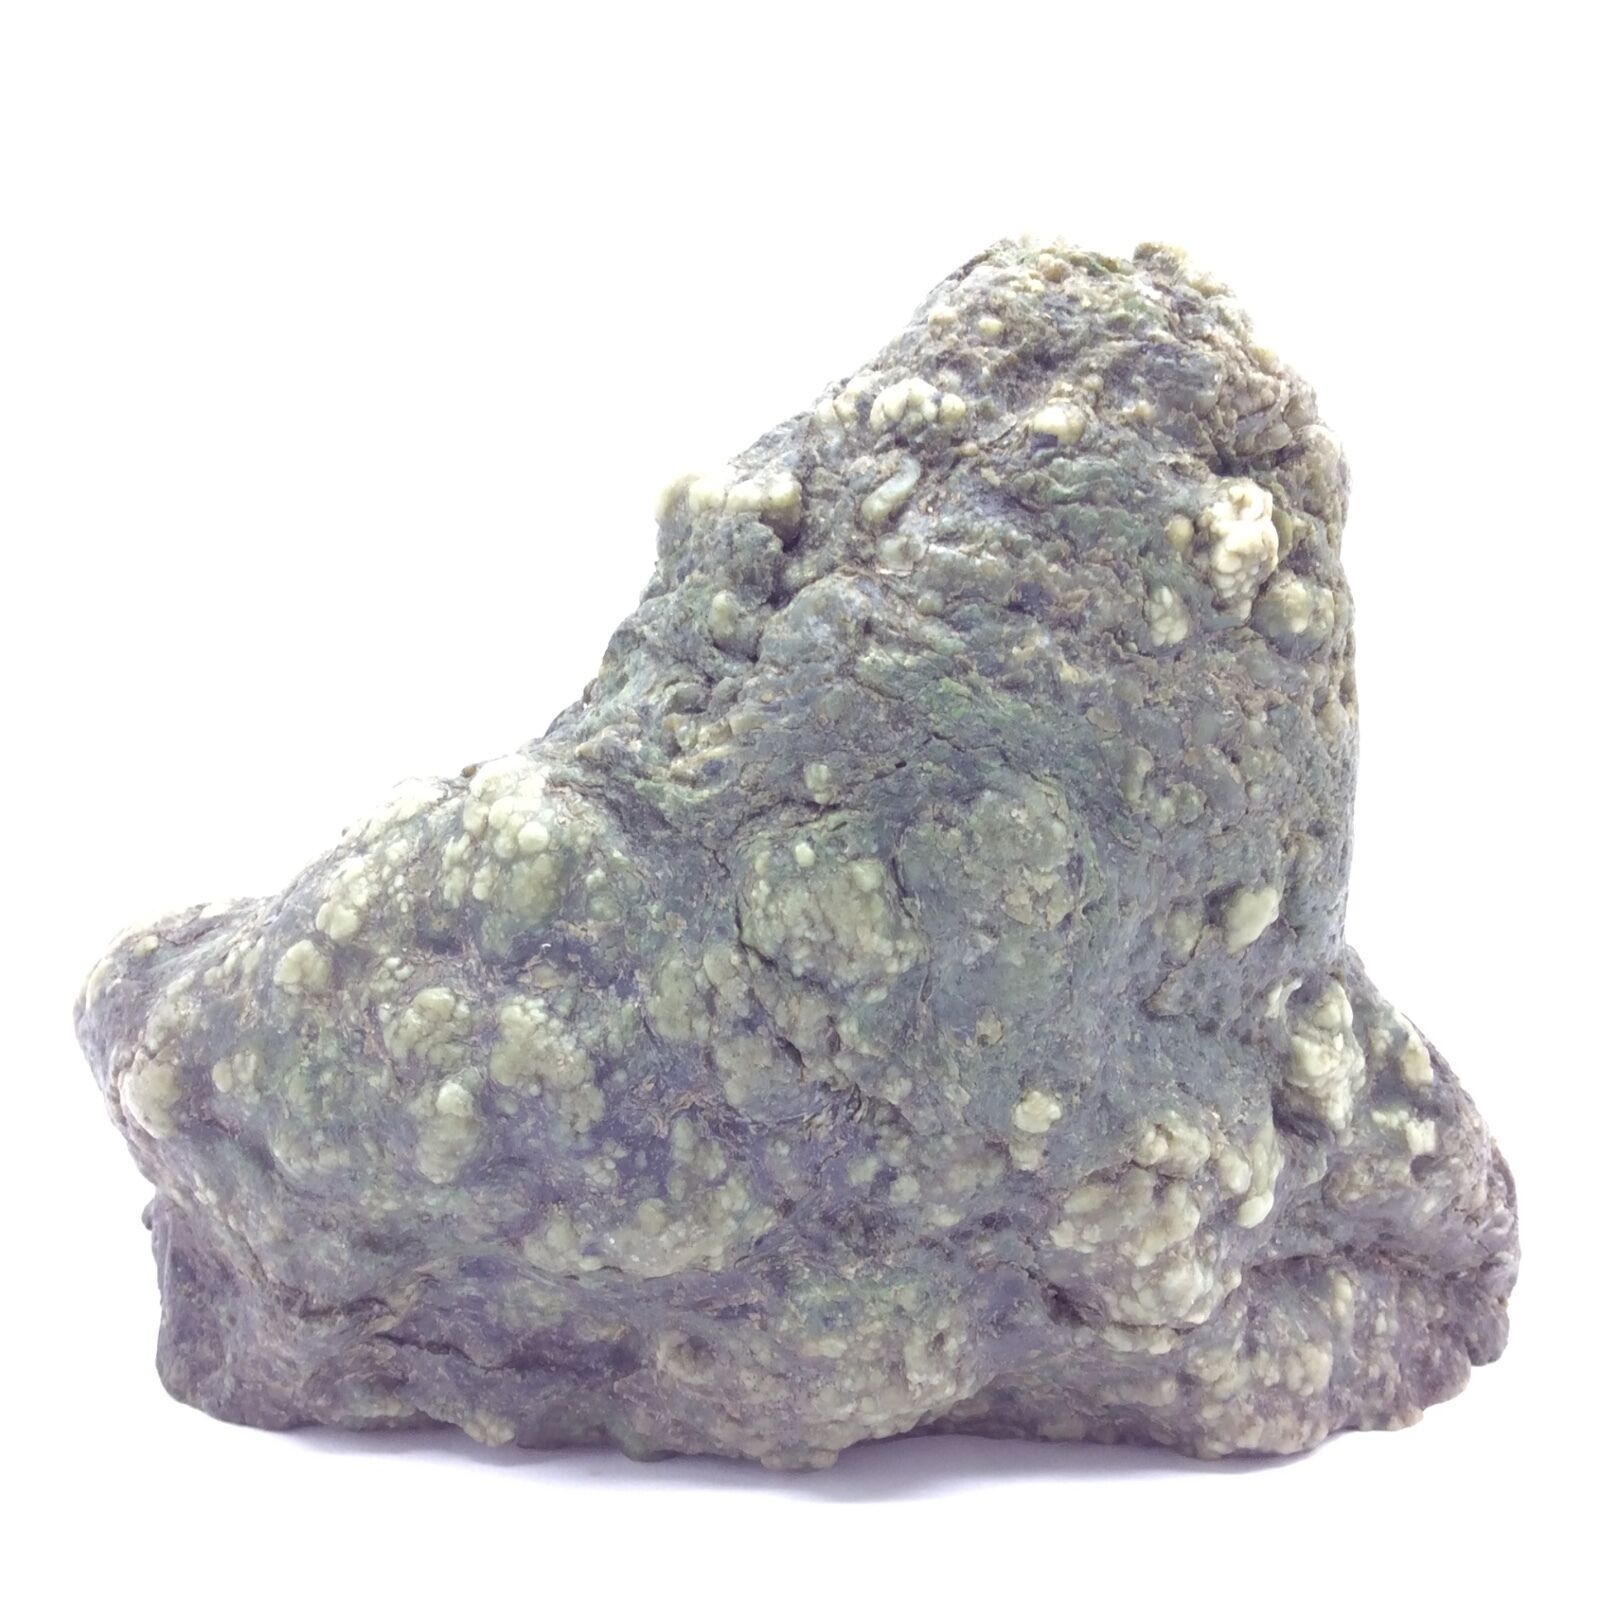 Botryoidal Nephrite Jade Trinity Alps CA Green Bubble Gem Stone Specimen #2